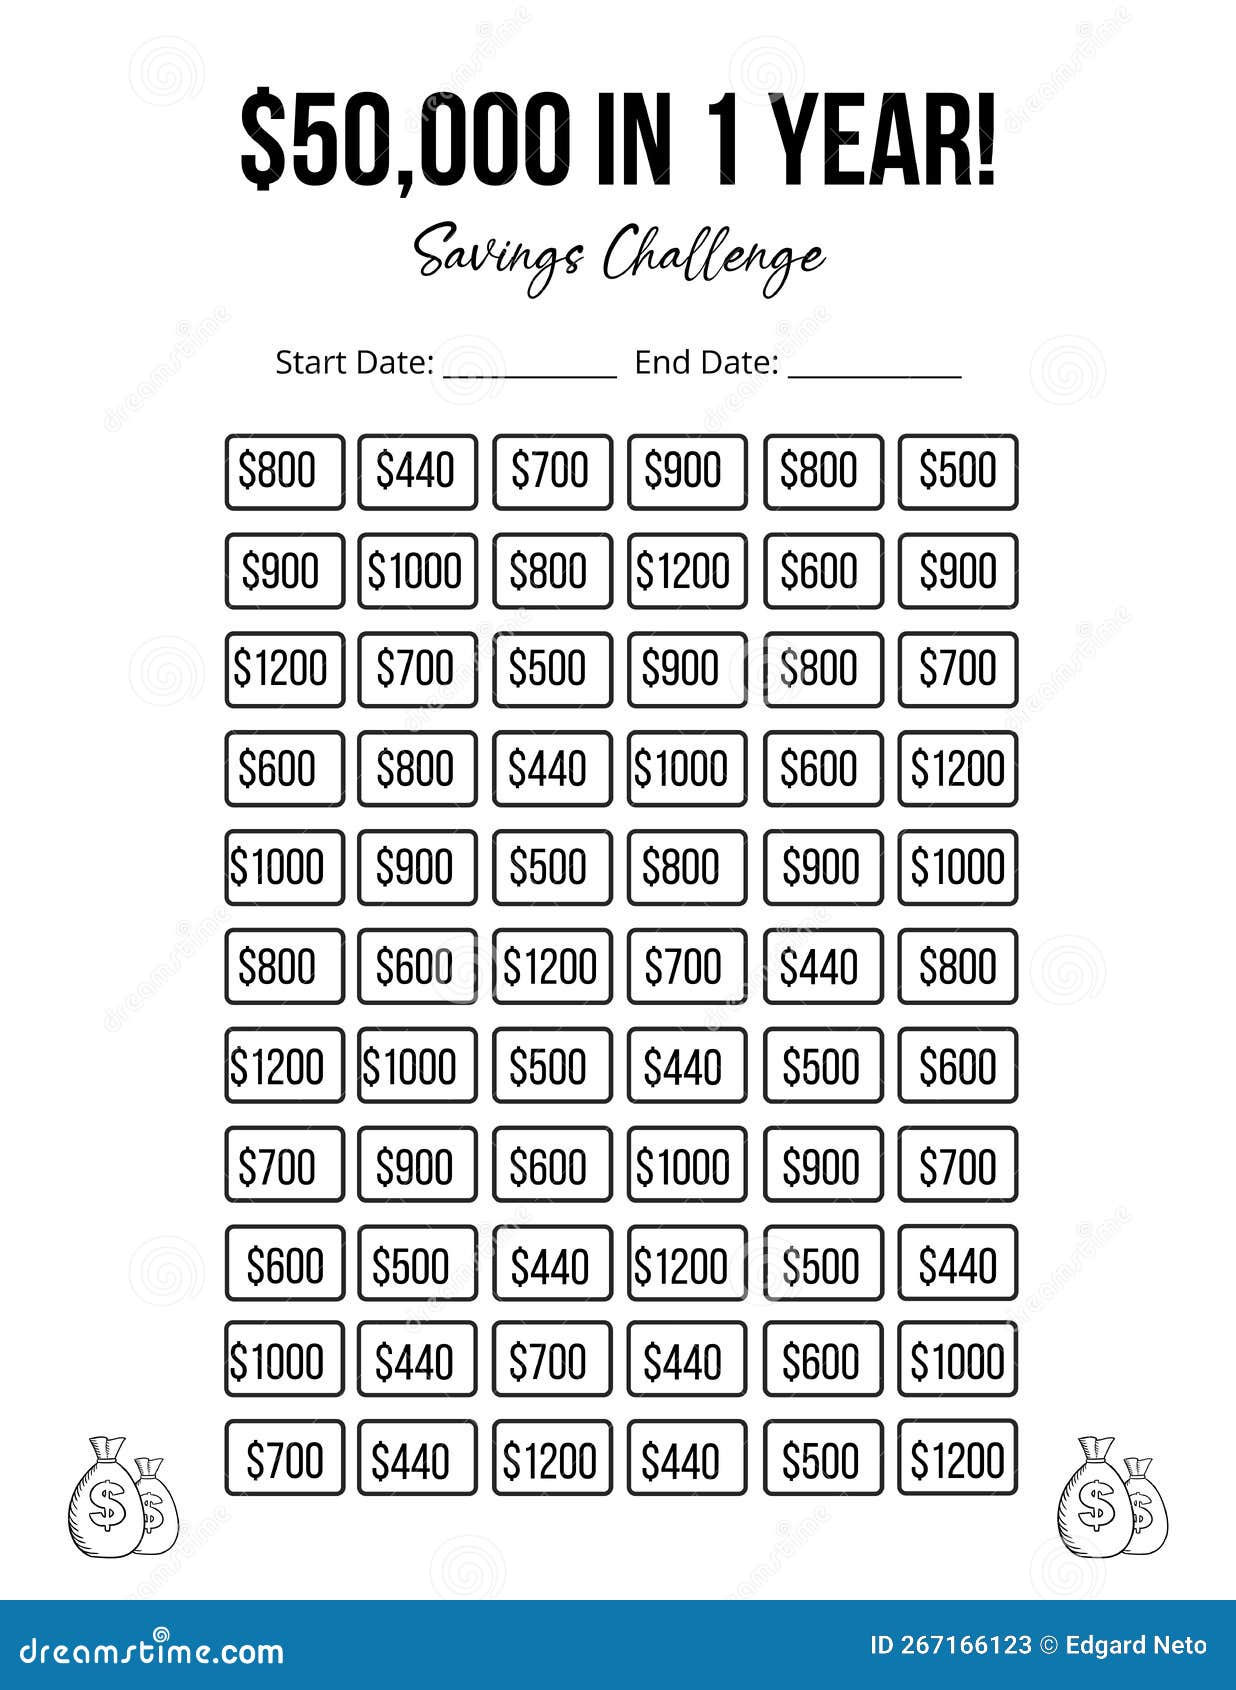 Save Money Challenge, 50k Savings Challenge, Monthly Budget